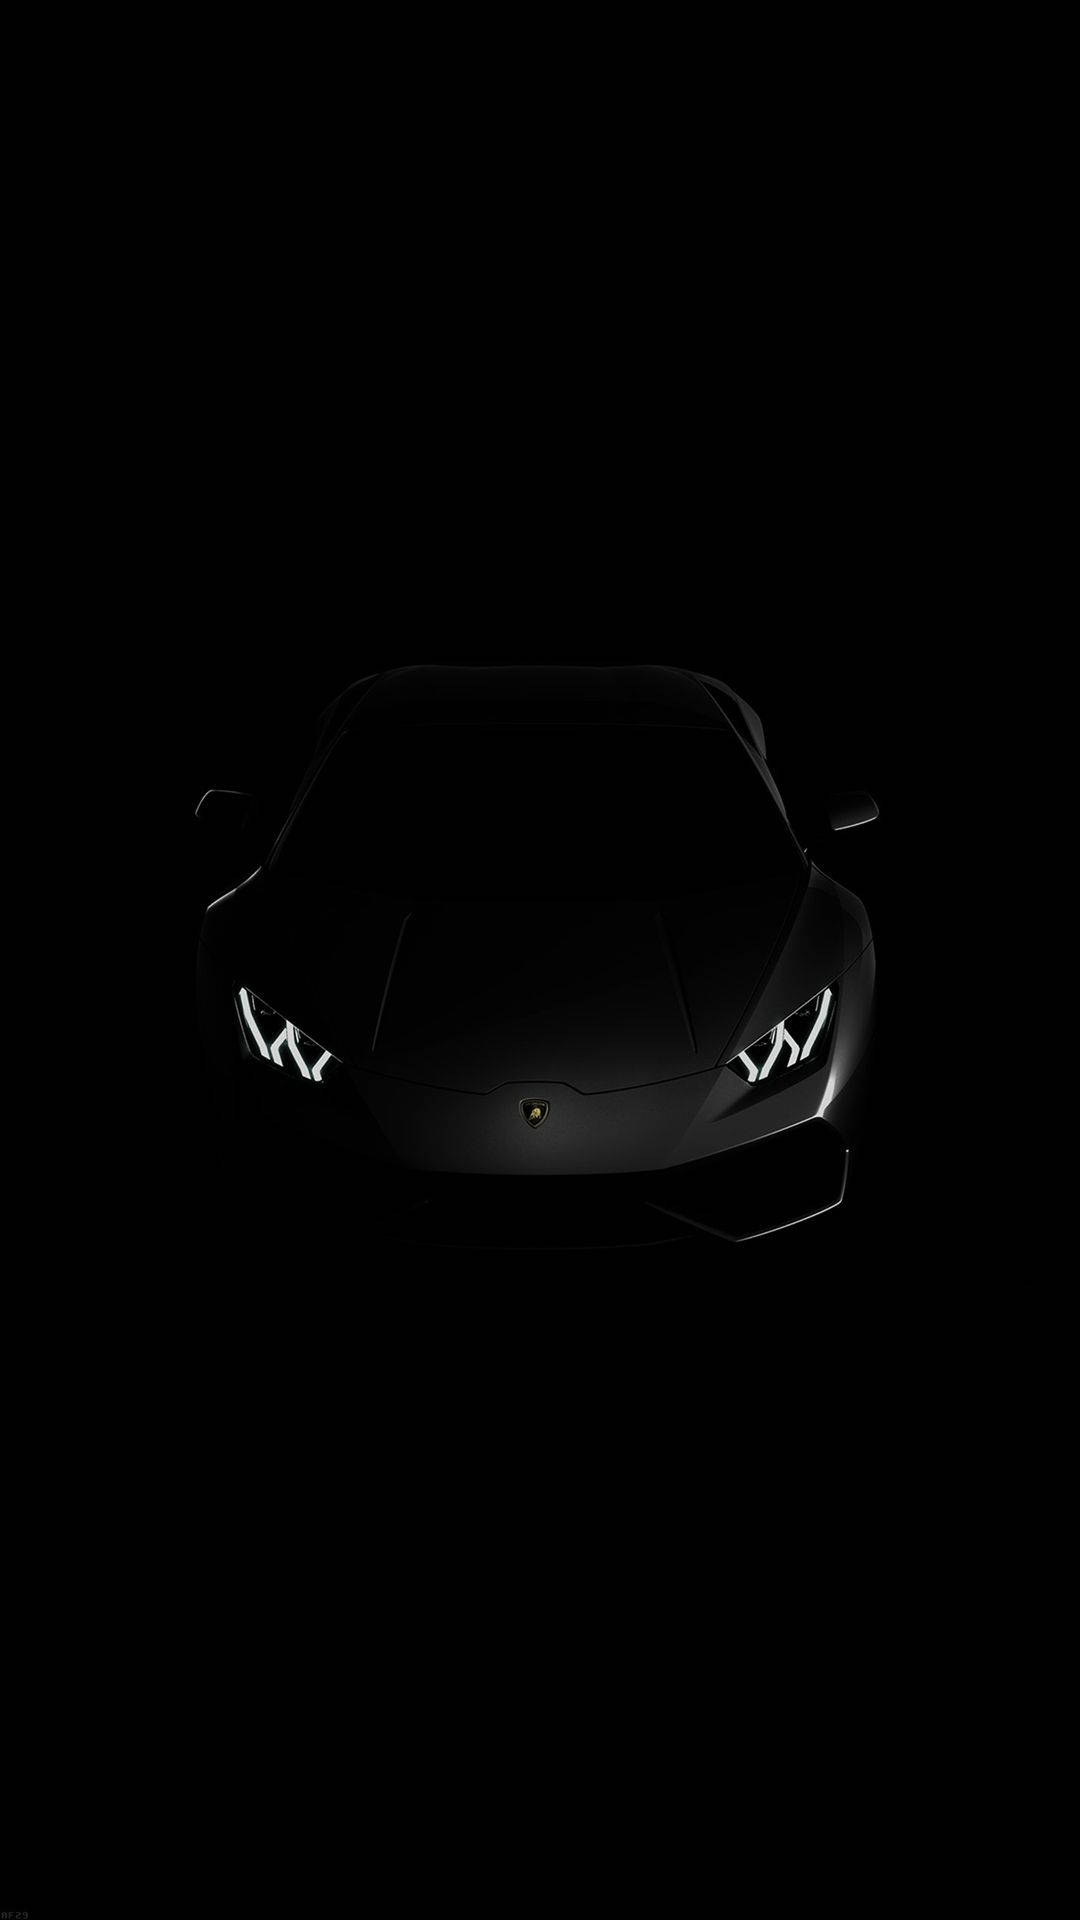 Lamborghiniiphone Svart Estetisk Dold I Skuggorna. Wallpaper